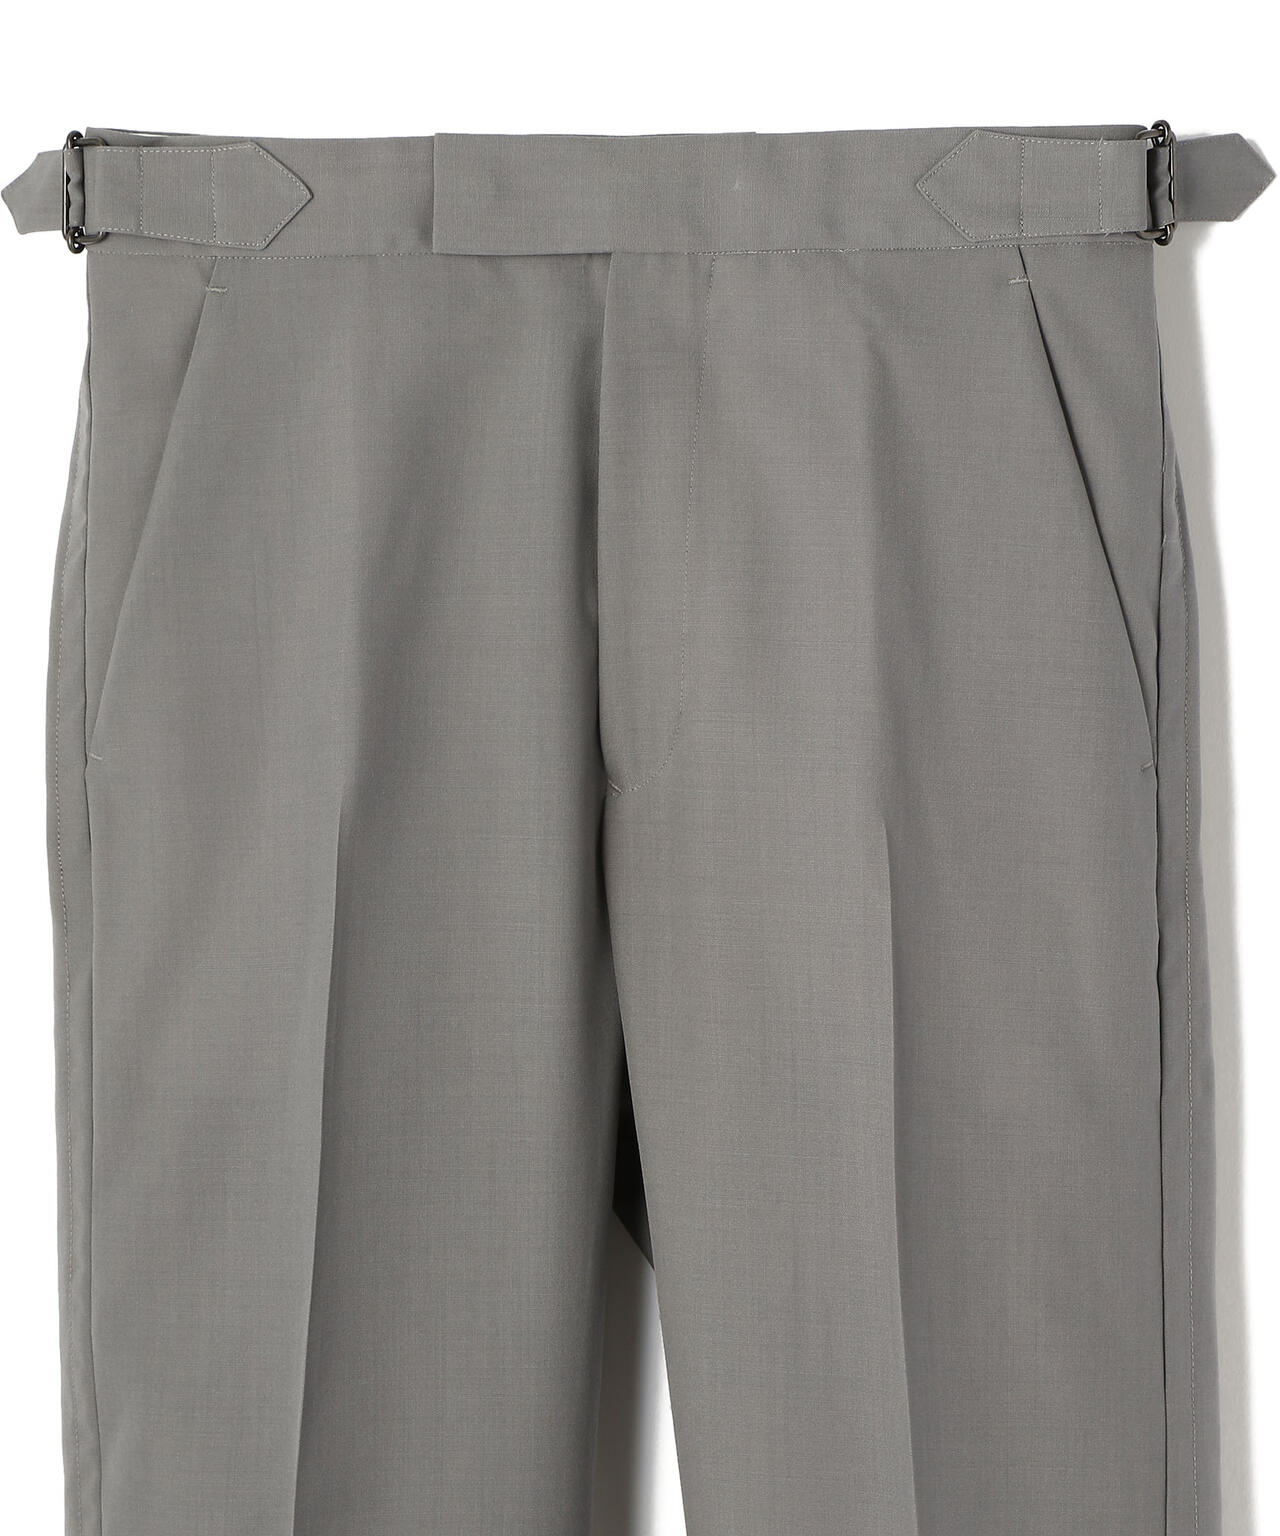 Slim Fit Double Knee Utility Pant 2.0 - 1620 Workwear, Inc